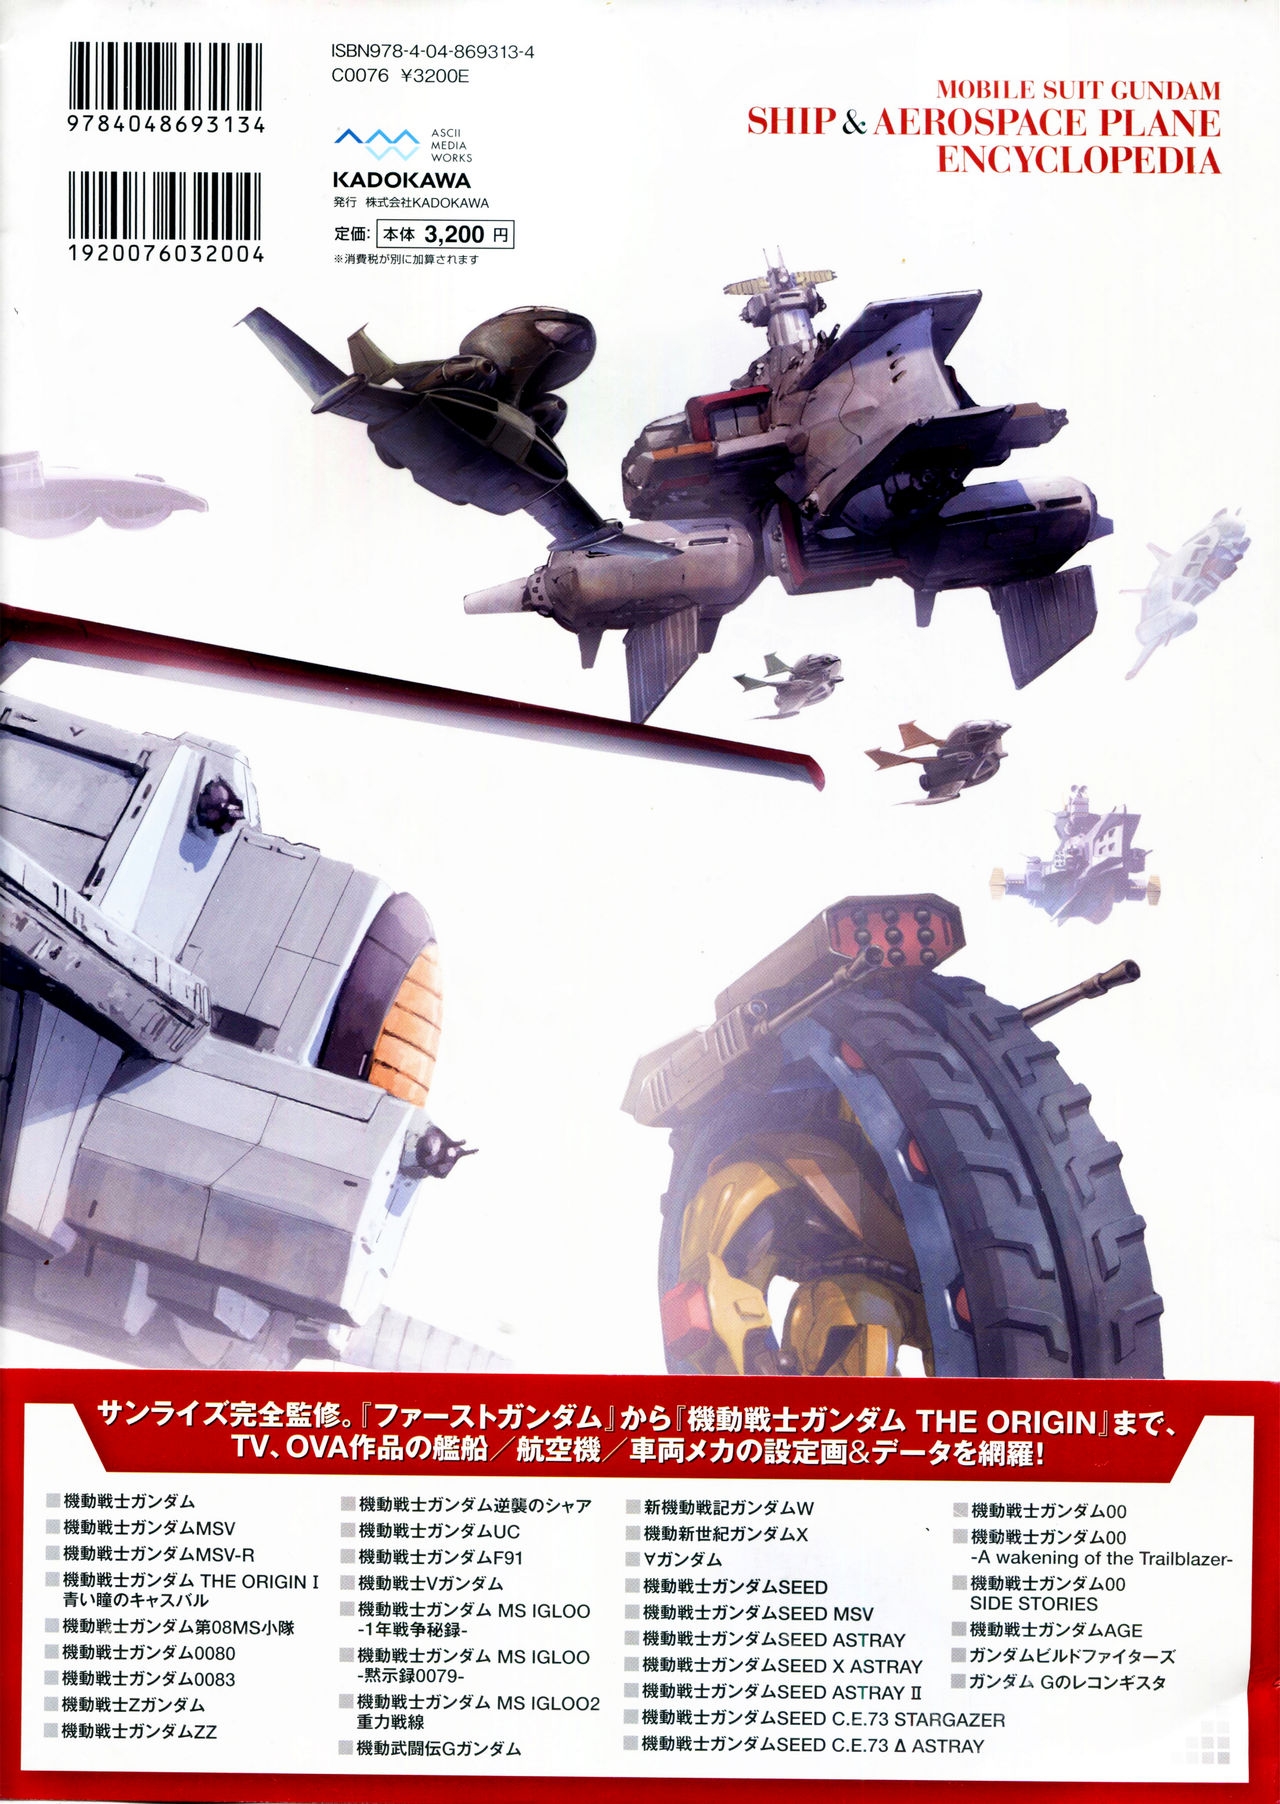 Mobile Suit Gundam - Ship & Aerospace Plane Encyclopedia - Revised Edition 3